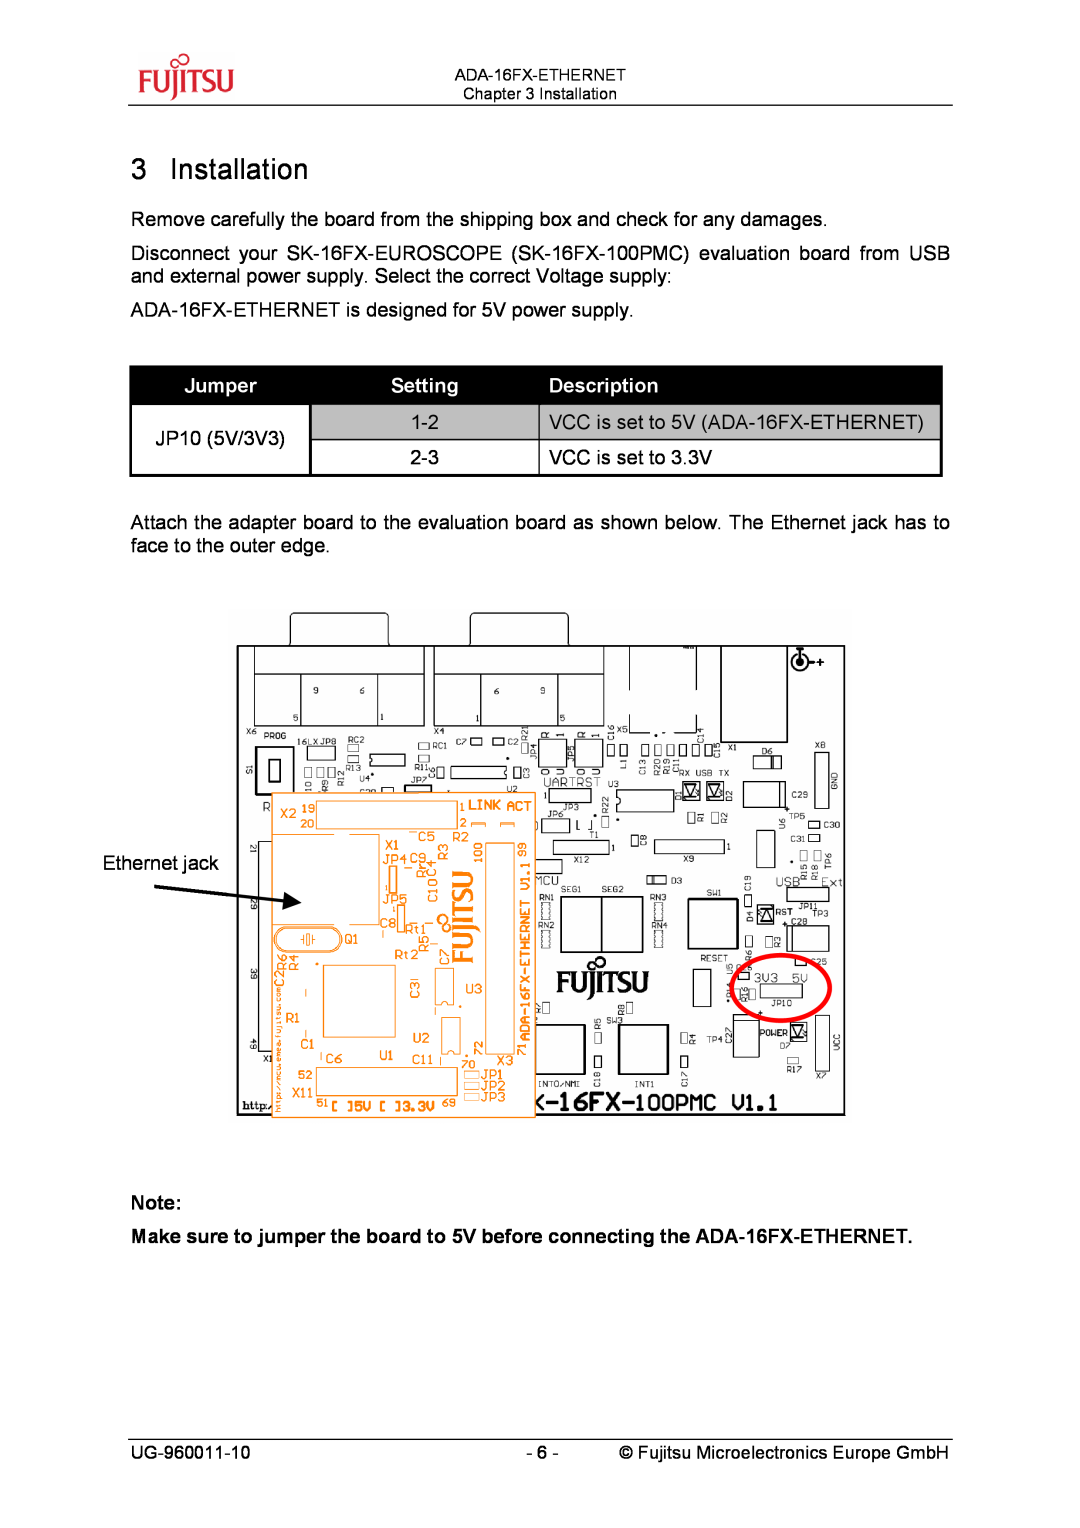 Fujitsu FMC-16FX FAMILY manual Installation, Jumper, Setting, Description 